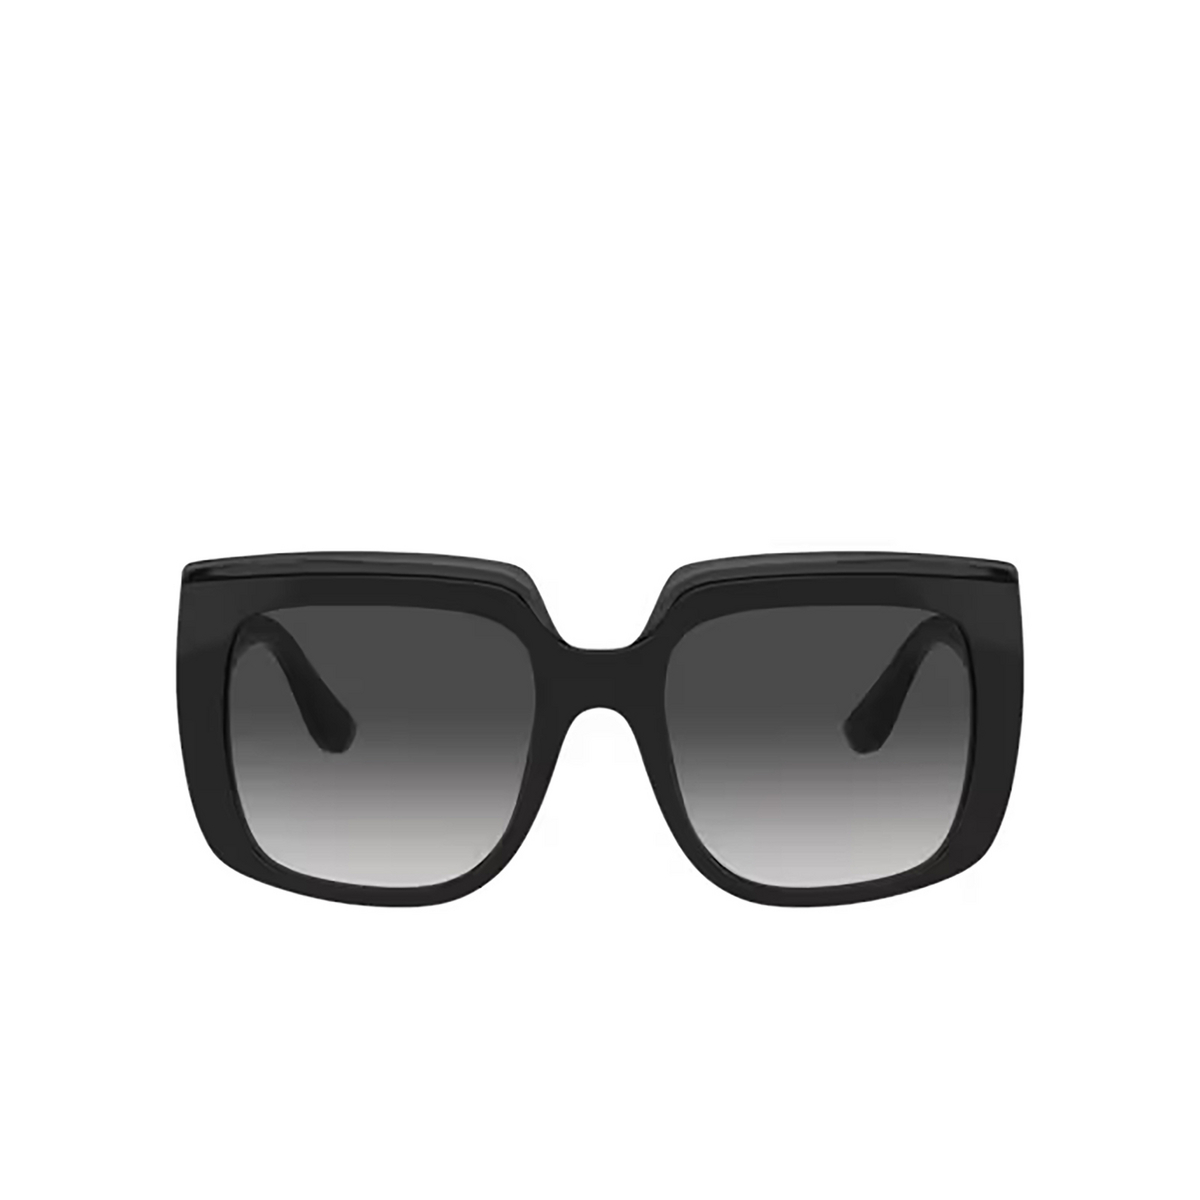 Dolce & Gabbana DG4414 Sunglasses 501/8G Black on transparent black - front view